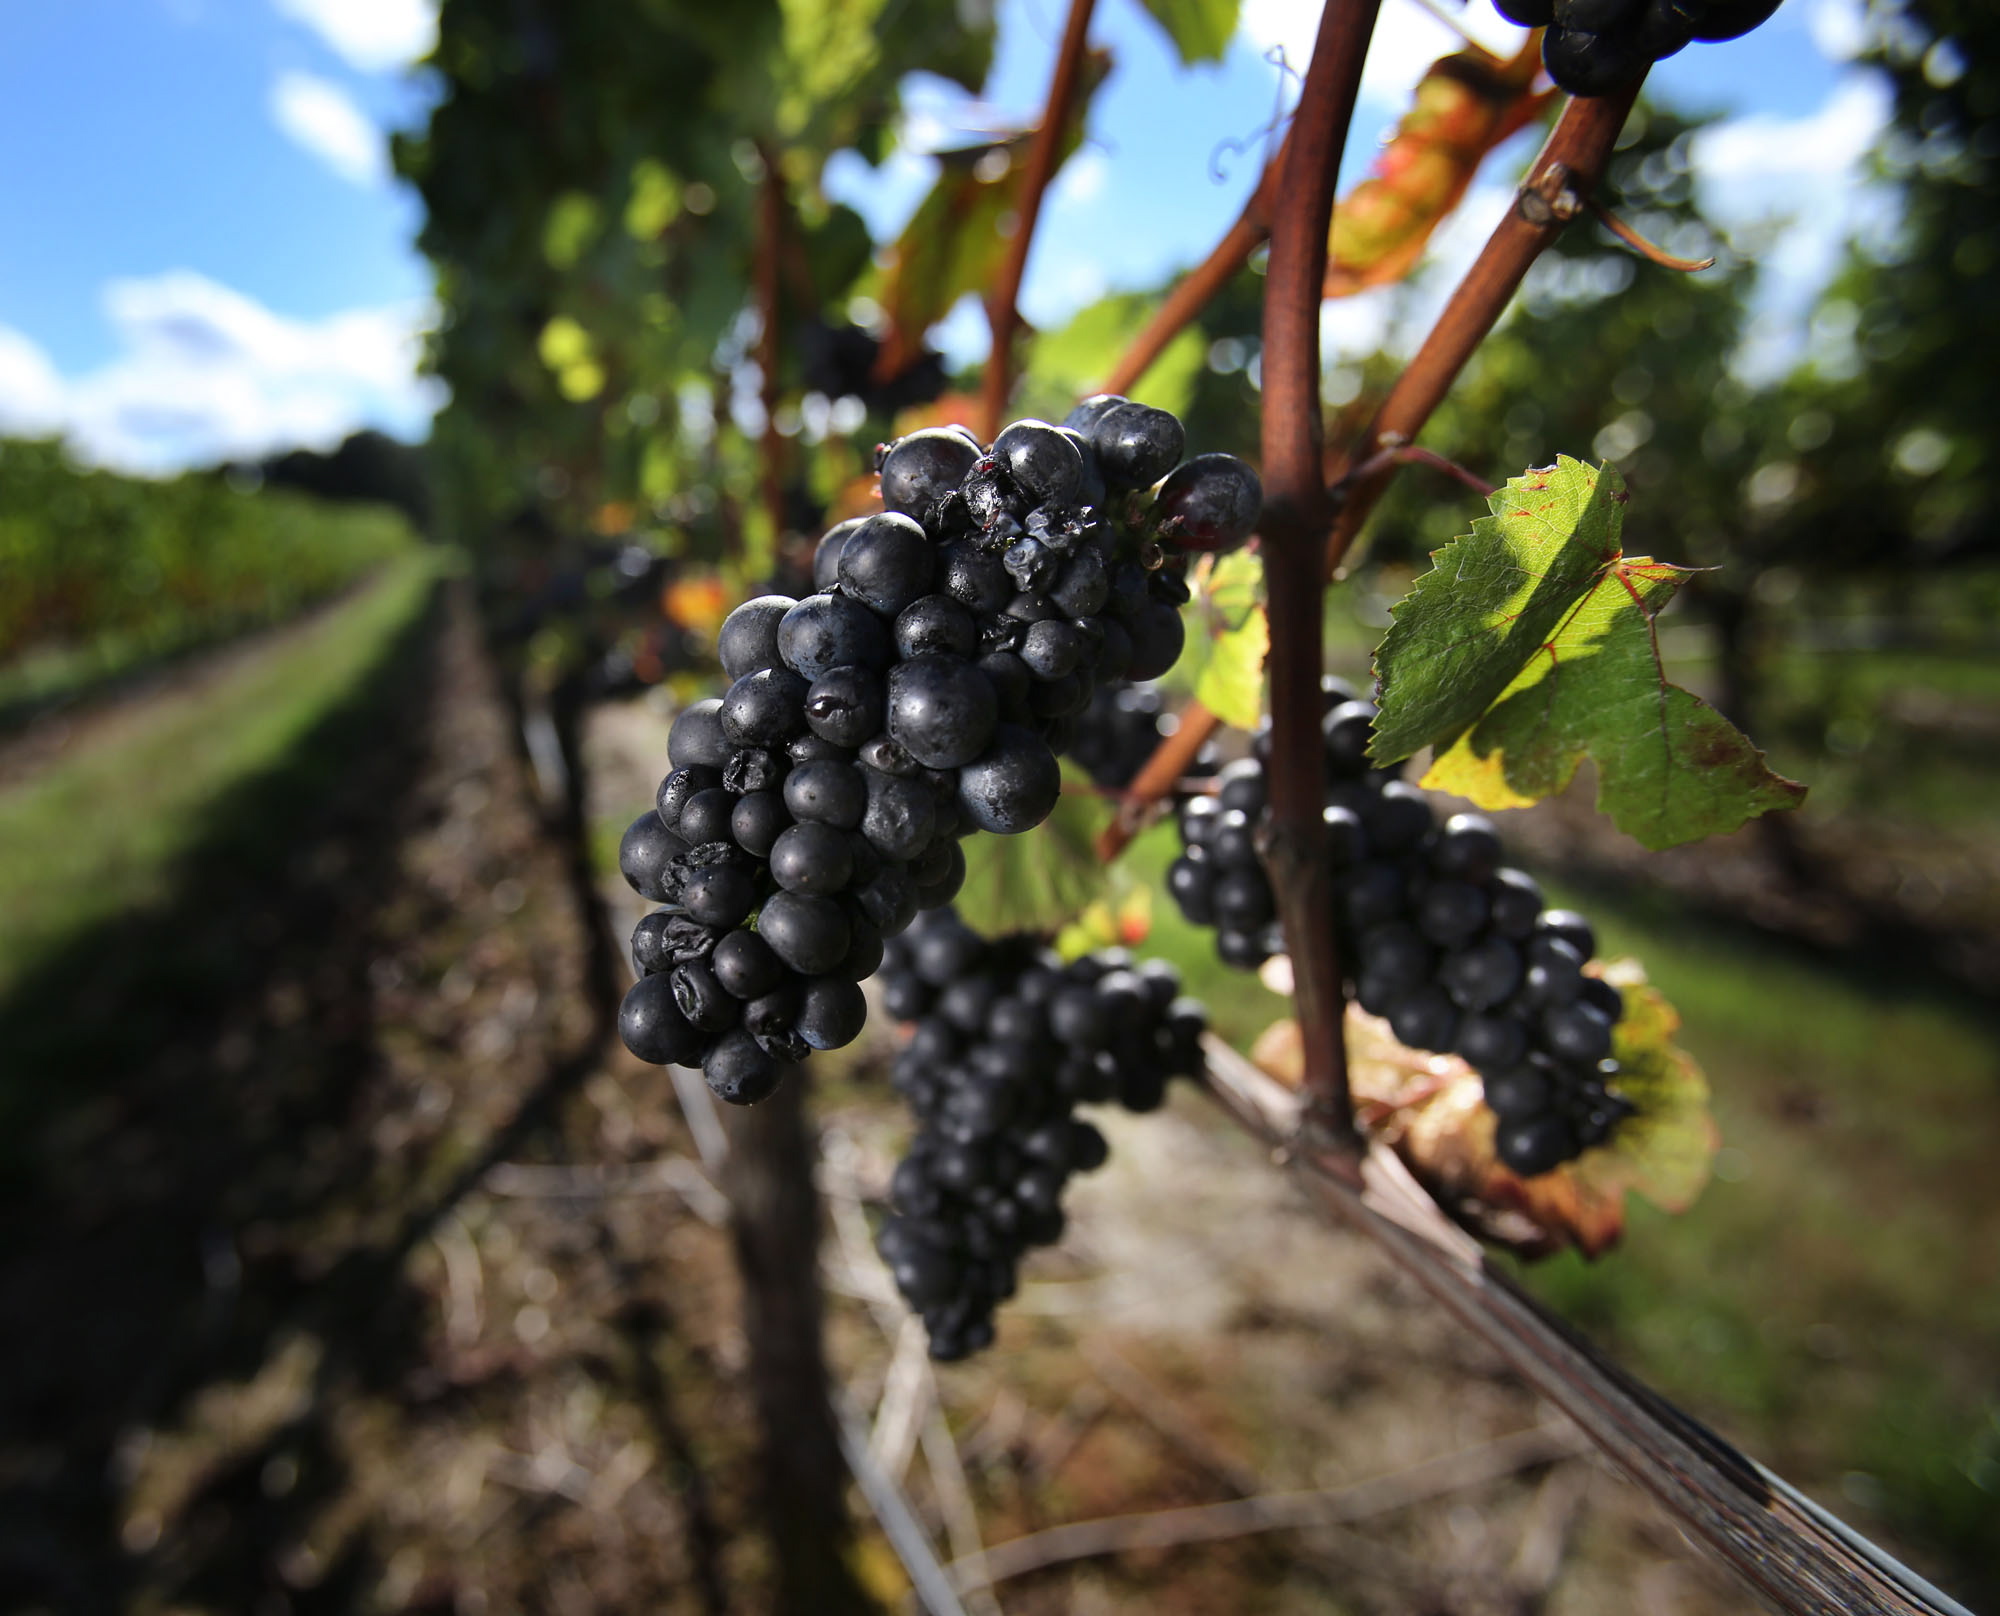 Pinot noir grapes await harvest at the Benton-Lane Winery in Monroe, Ore.